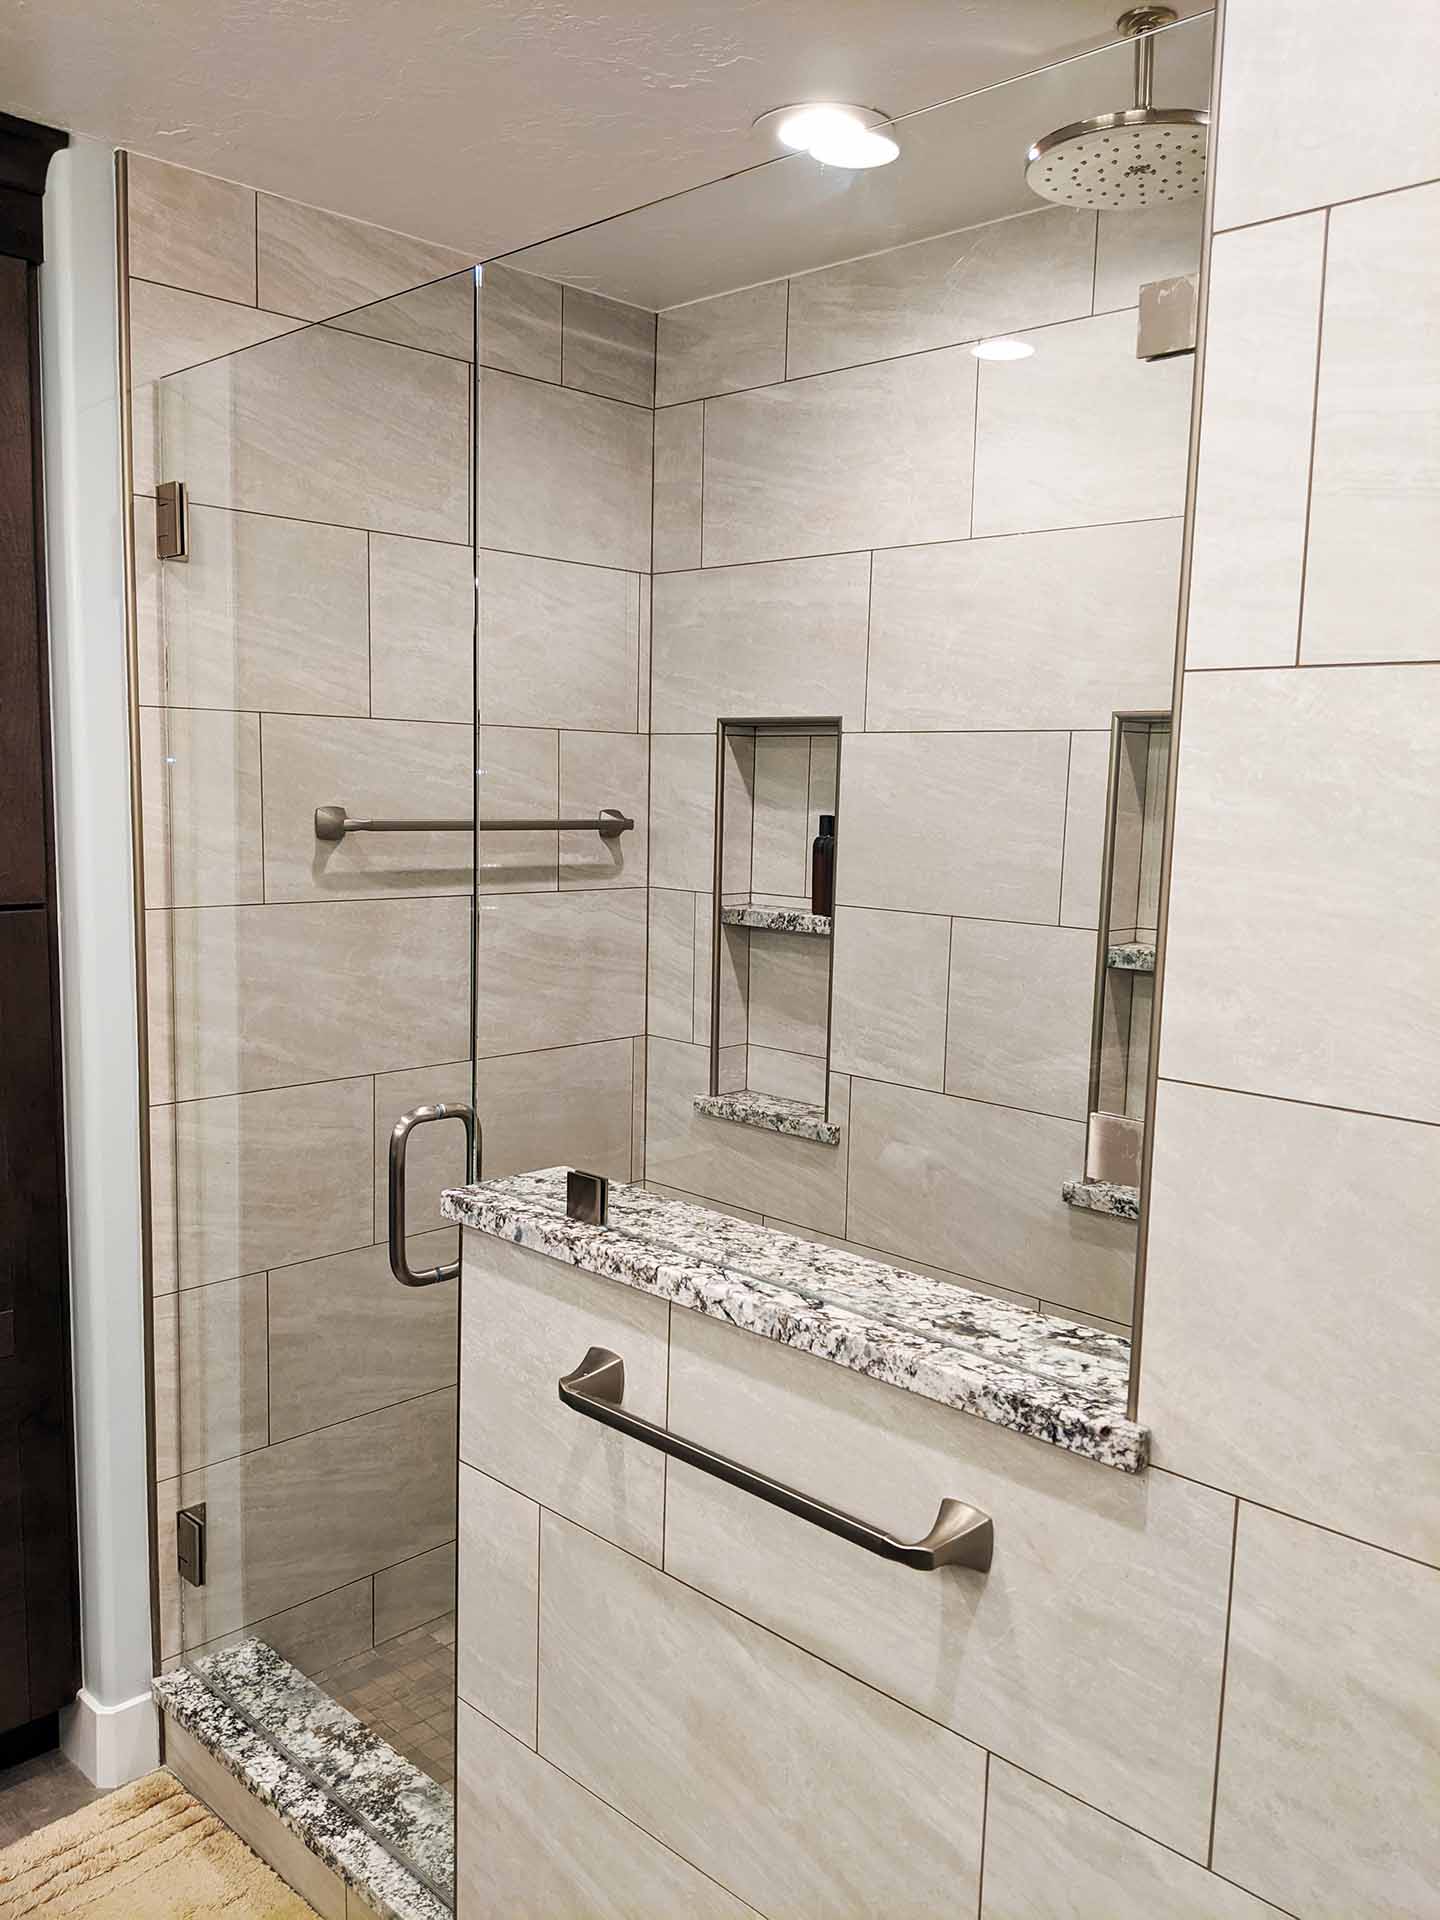 Roman-Greek style bathroom with frameless glass shower.